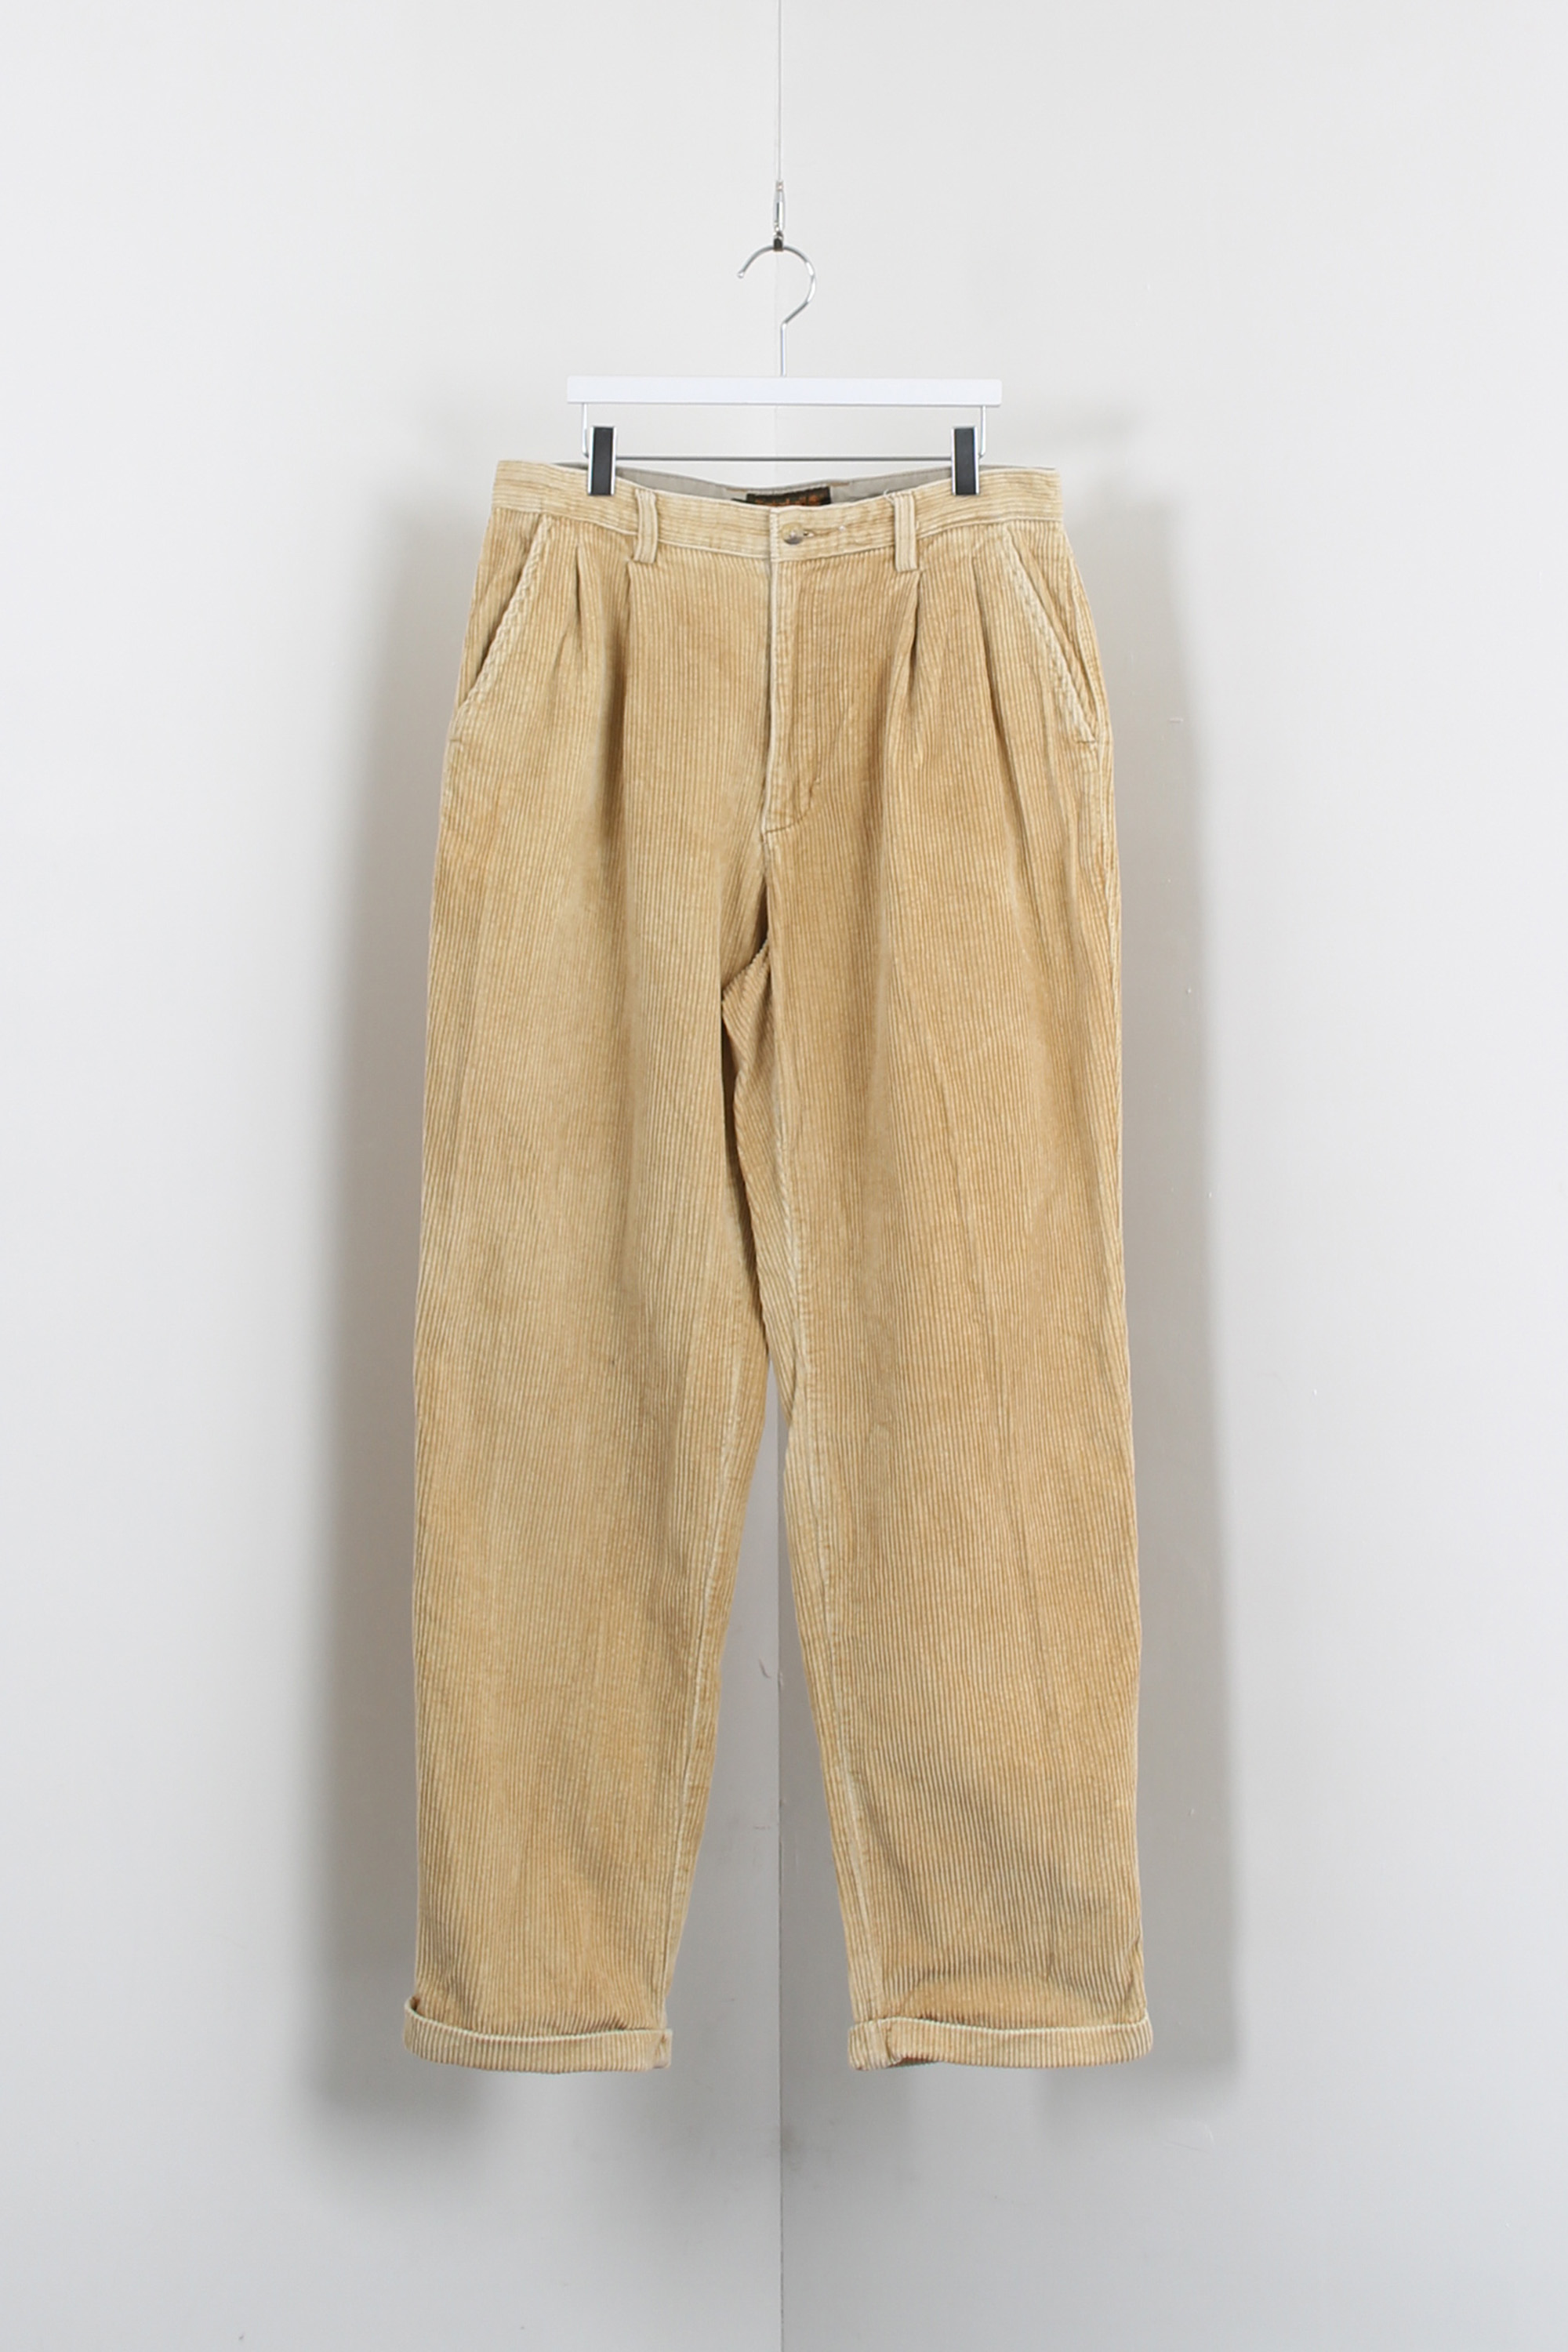 Timberland corduroy pants